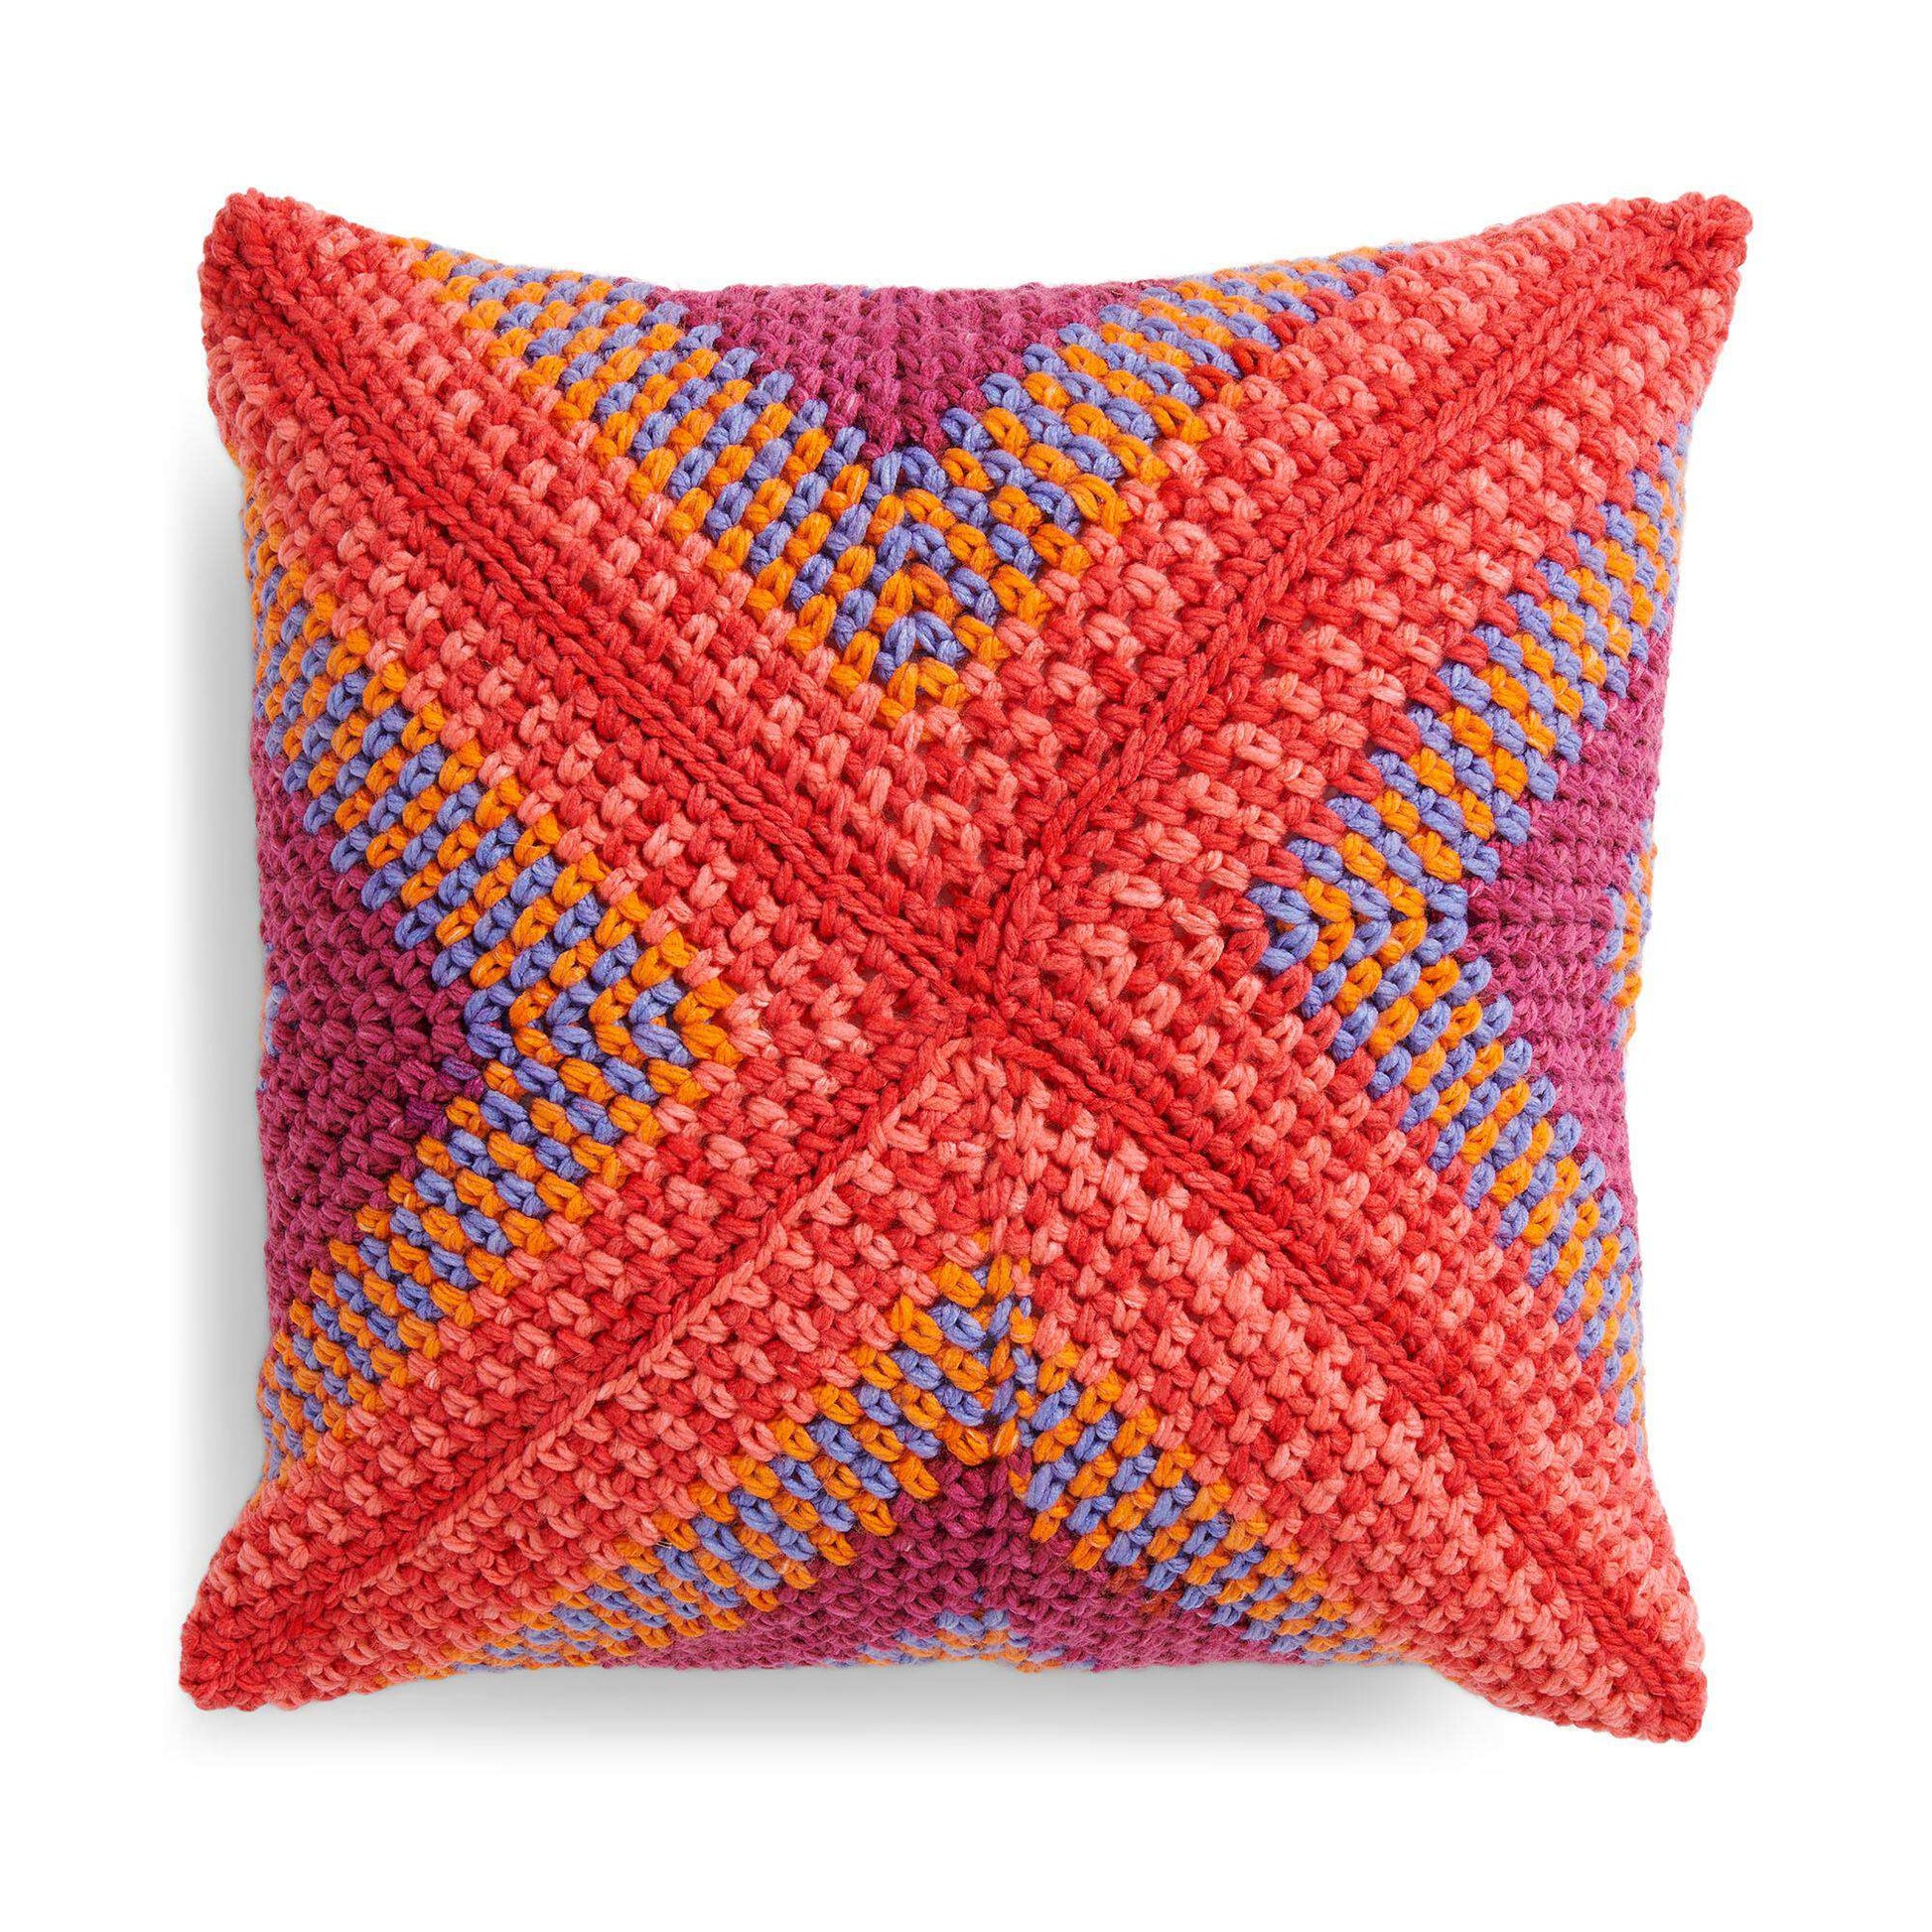 Free Caron Moss Motif Crochet Pillow Pattern